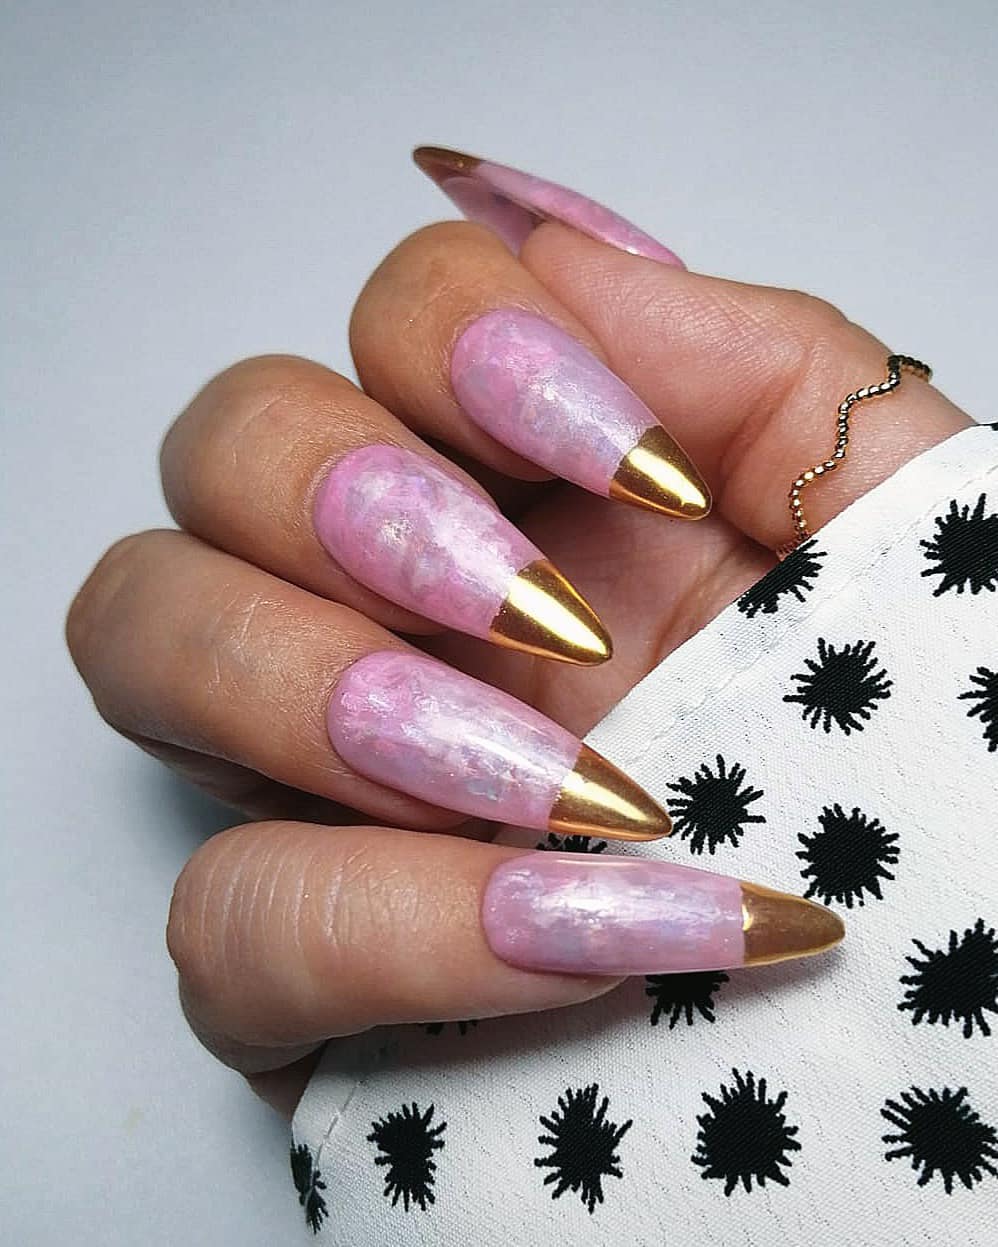 11 Candy Nail Art Ideas That Are Oh-So-Sweet  Dot nail art tutorial, Cute  nail designs, Hot nail designs